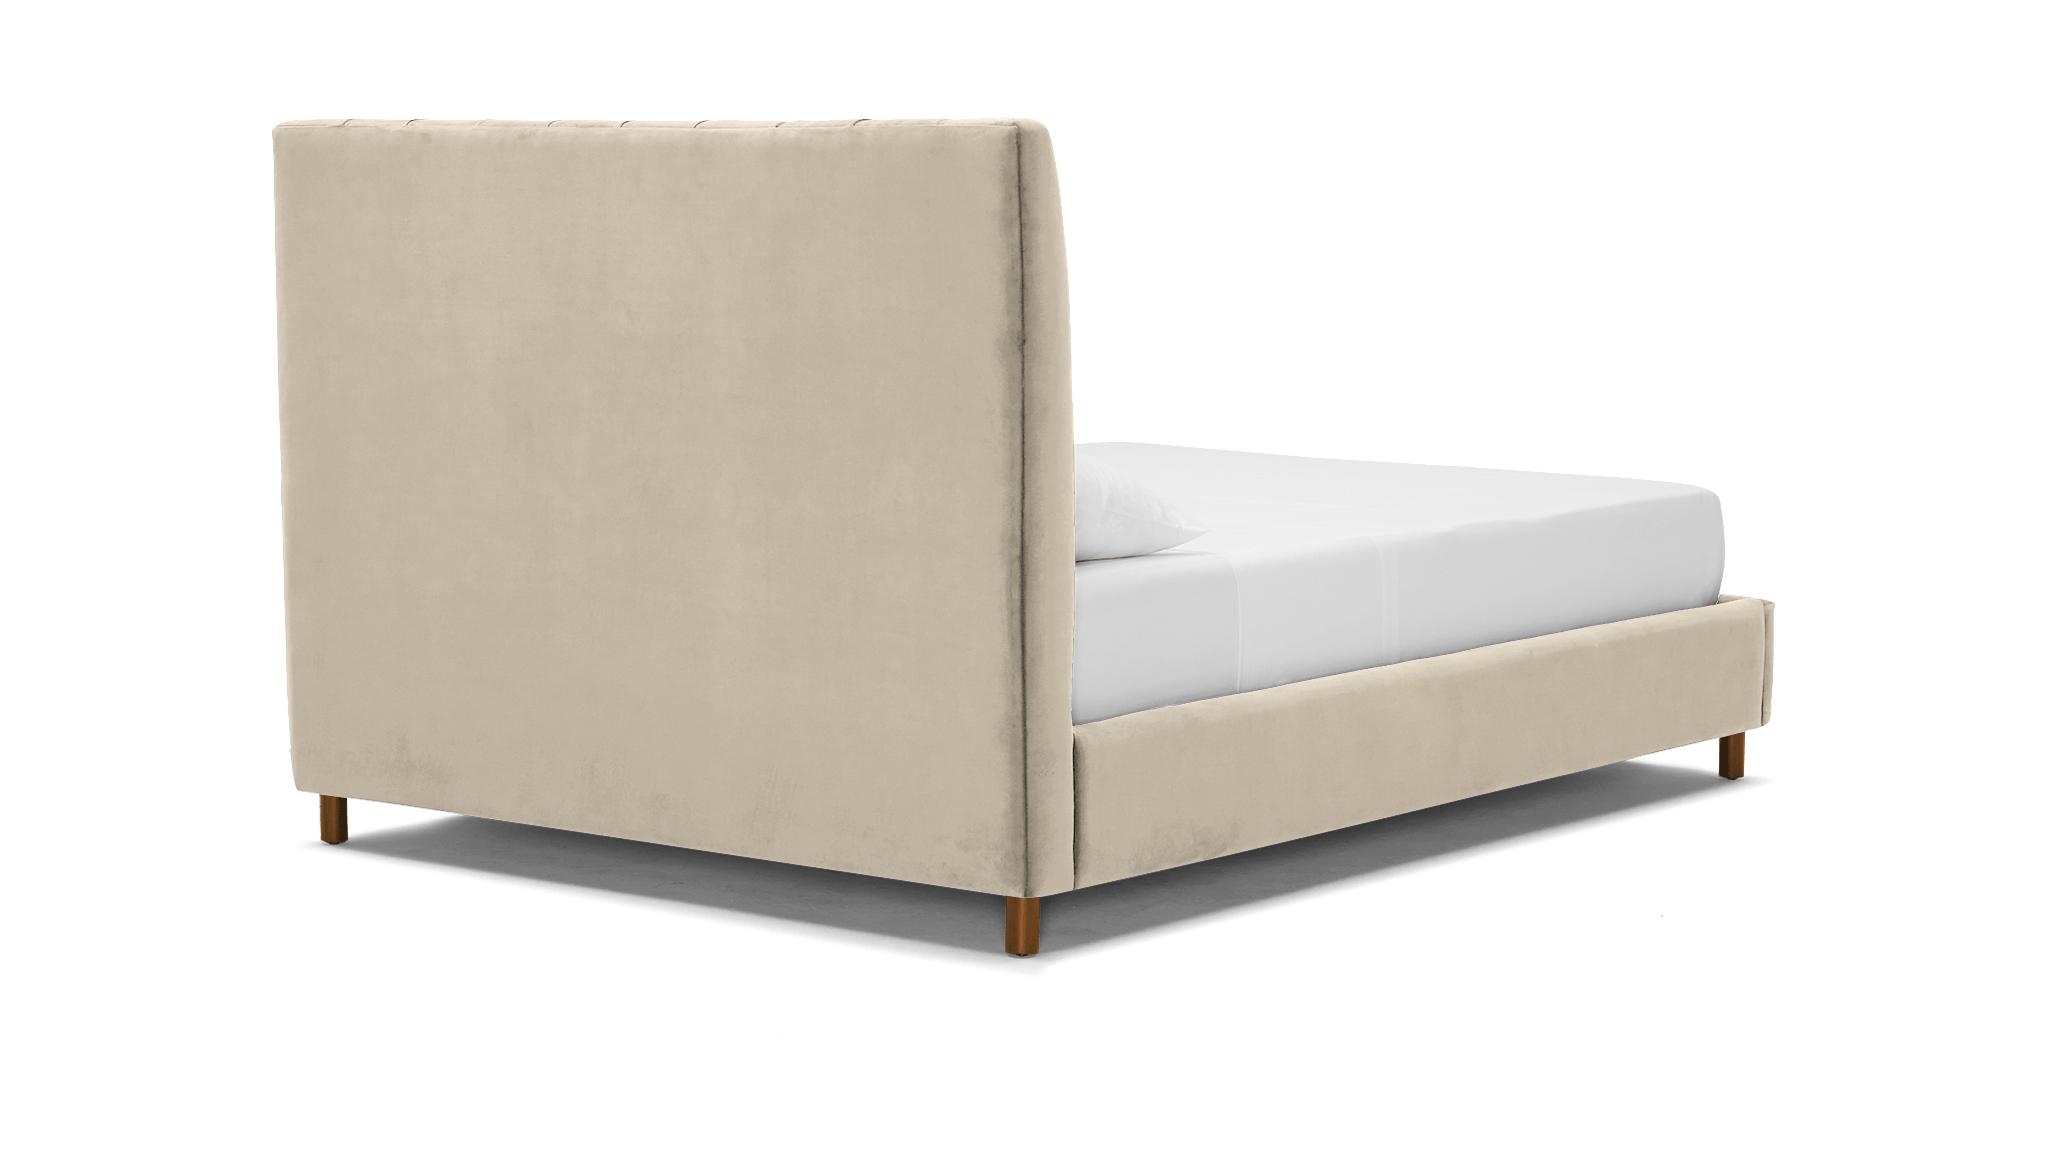 Beige/White Lotta Mid Century Modern Bed - Cody Sandstone - Mocha - Queen - Image 3